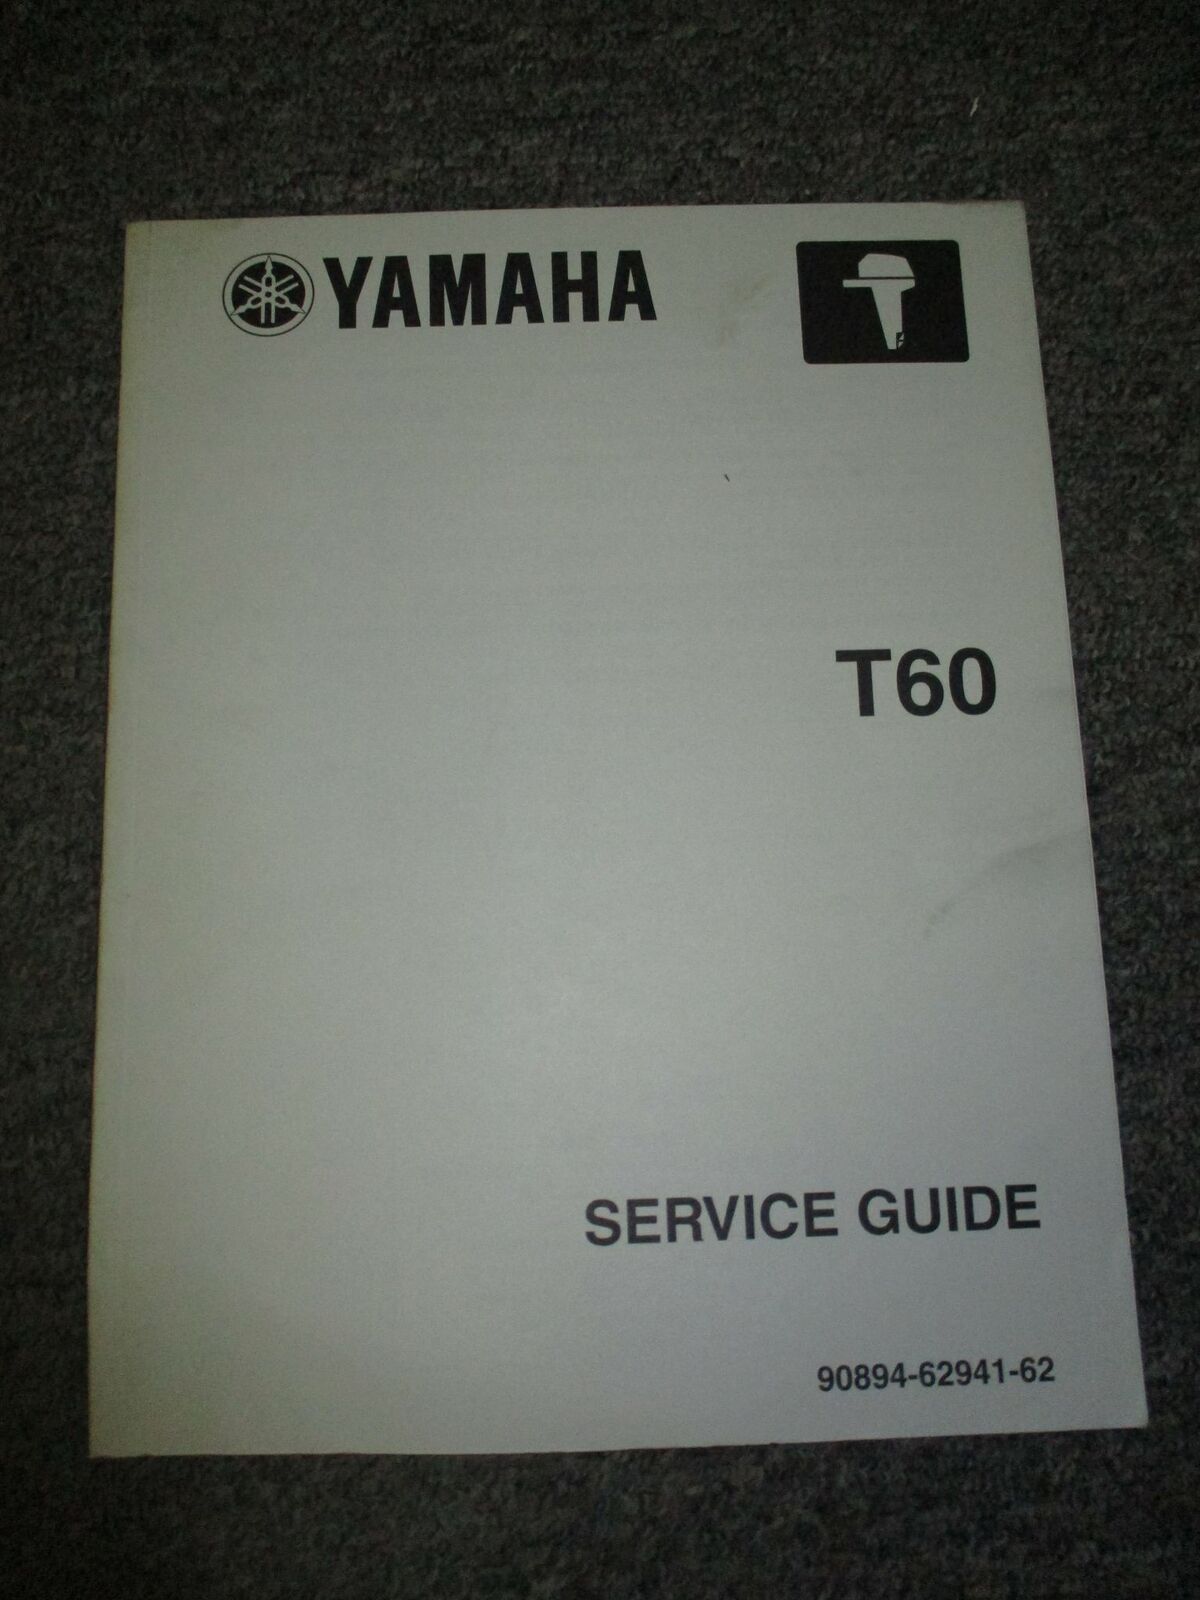 Yamaha T60 Service Guide [90894-62941-62]